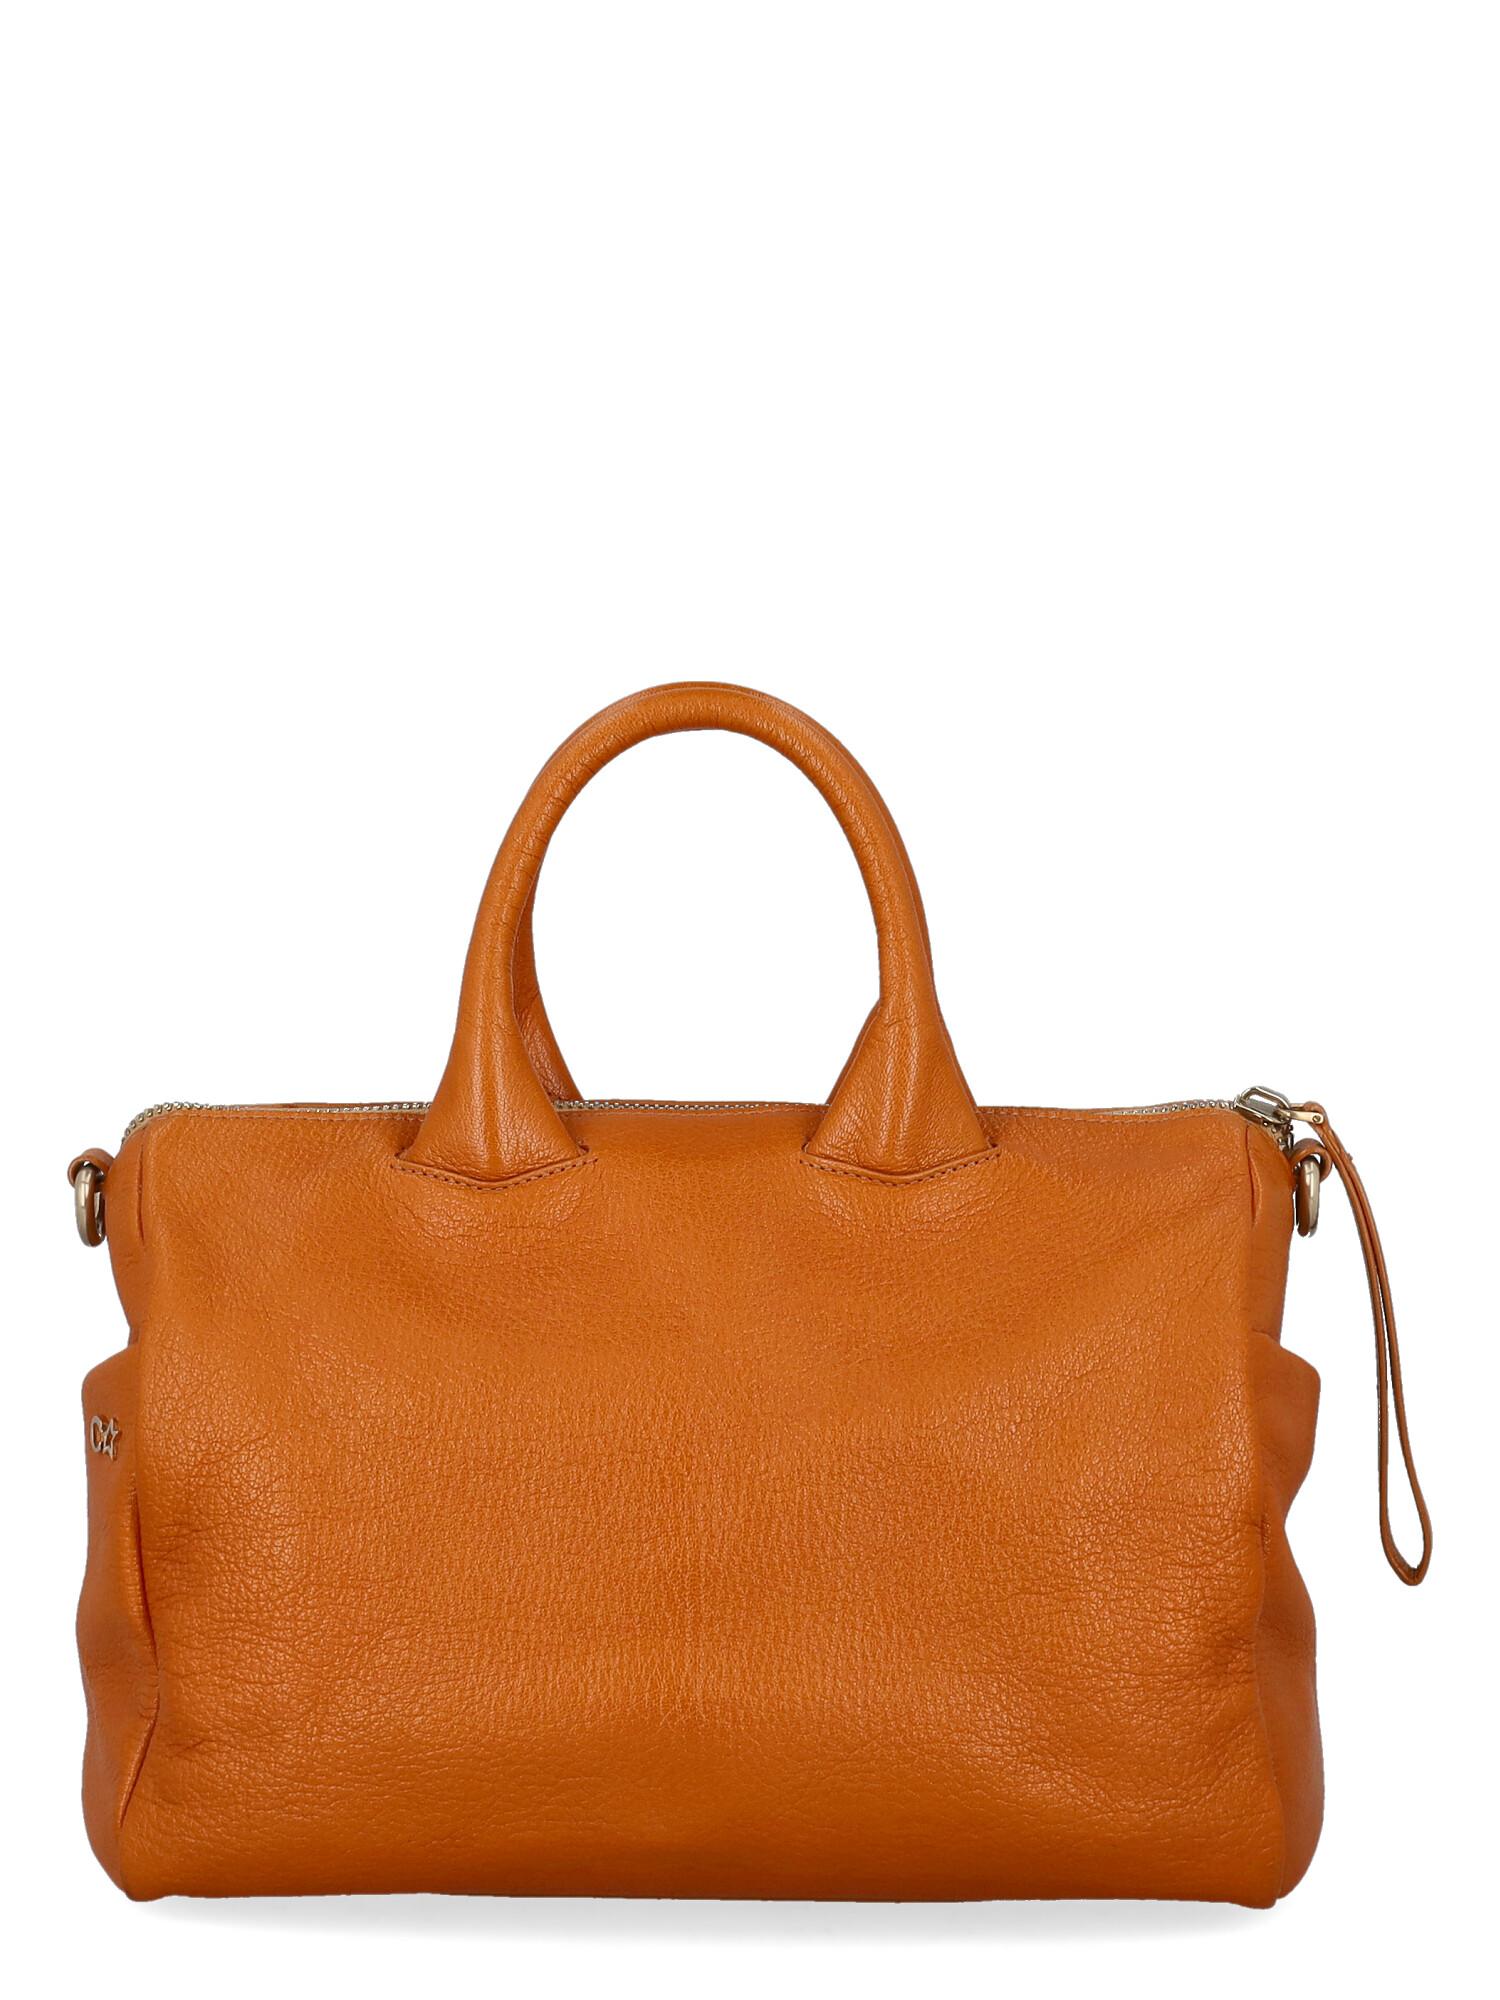 Corto Moltedo Women Handbags Orange Leather  In Excellent Condition For Sale In Milan, IT